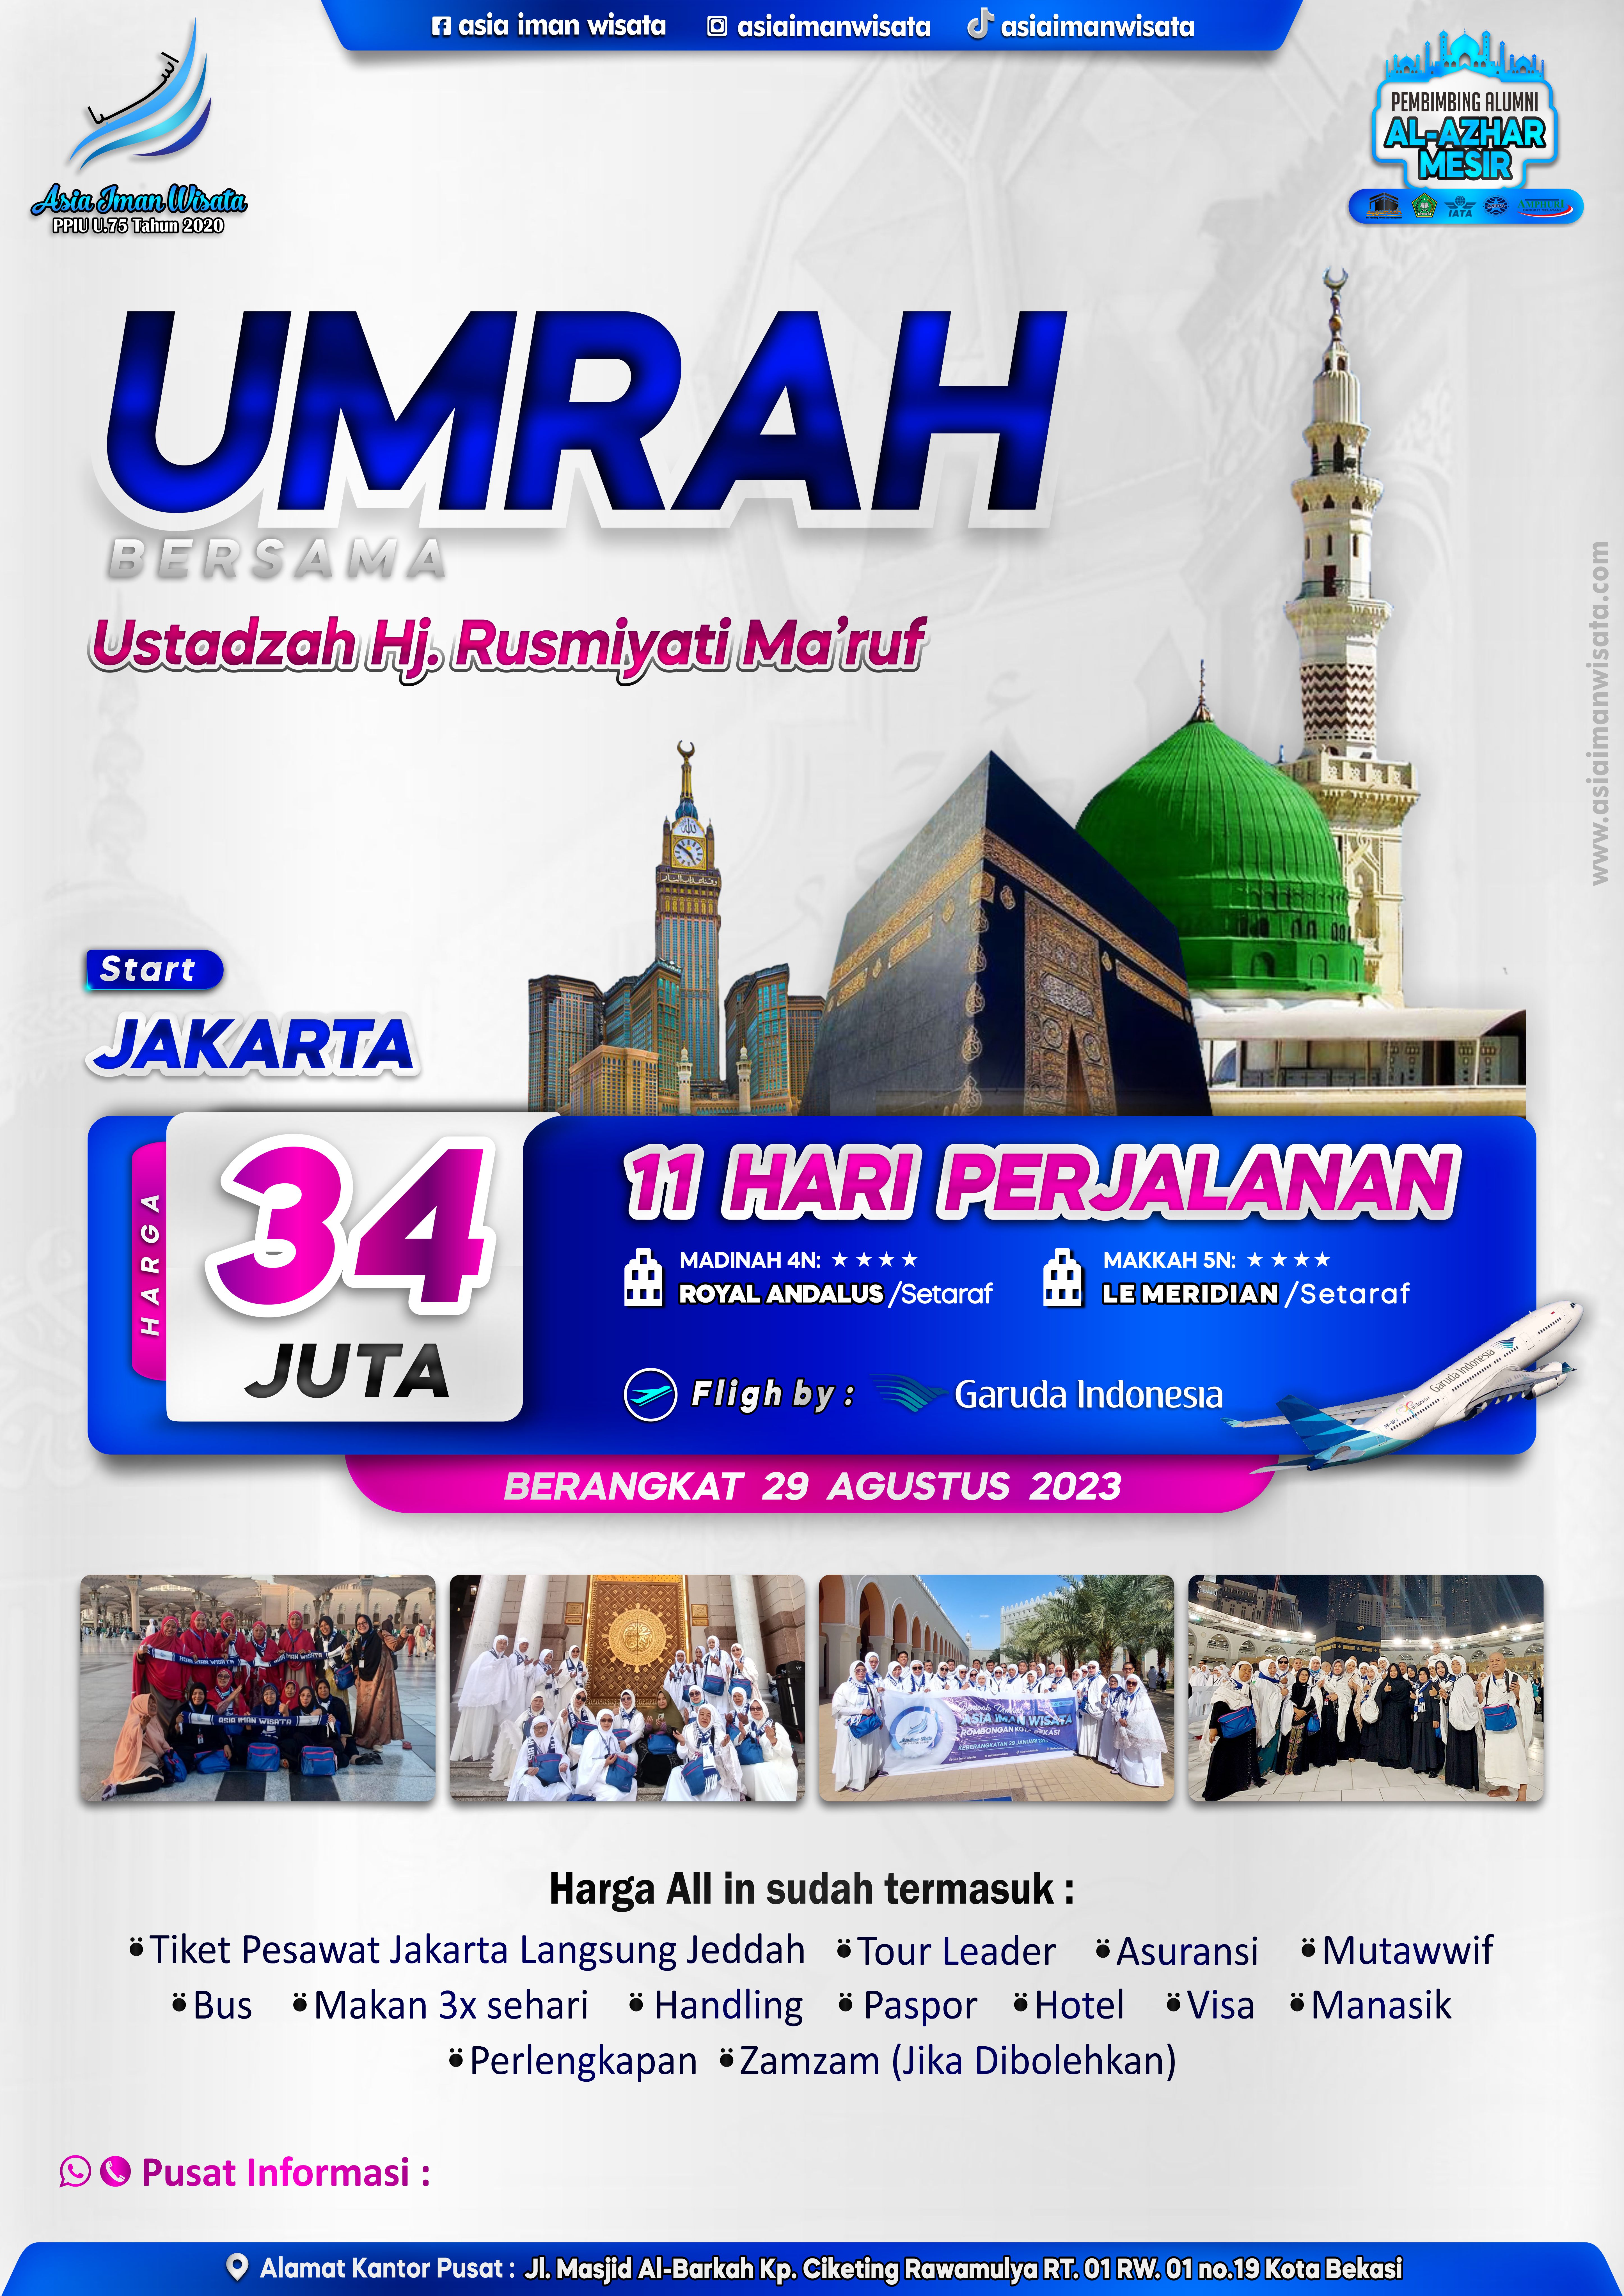 UMRAH AGUSTUS 2023 START JAKARTA